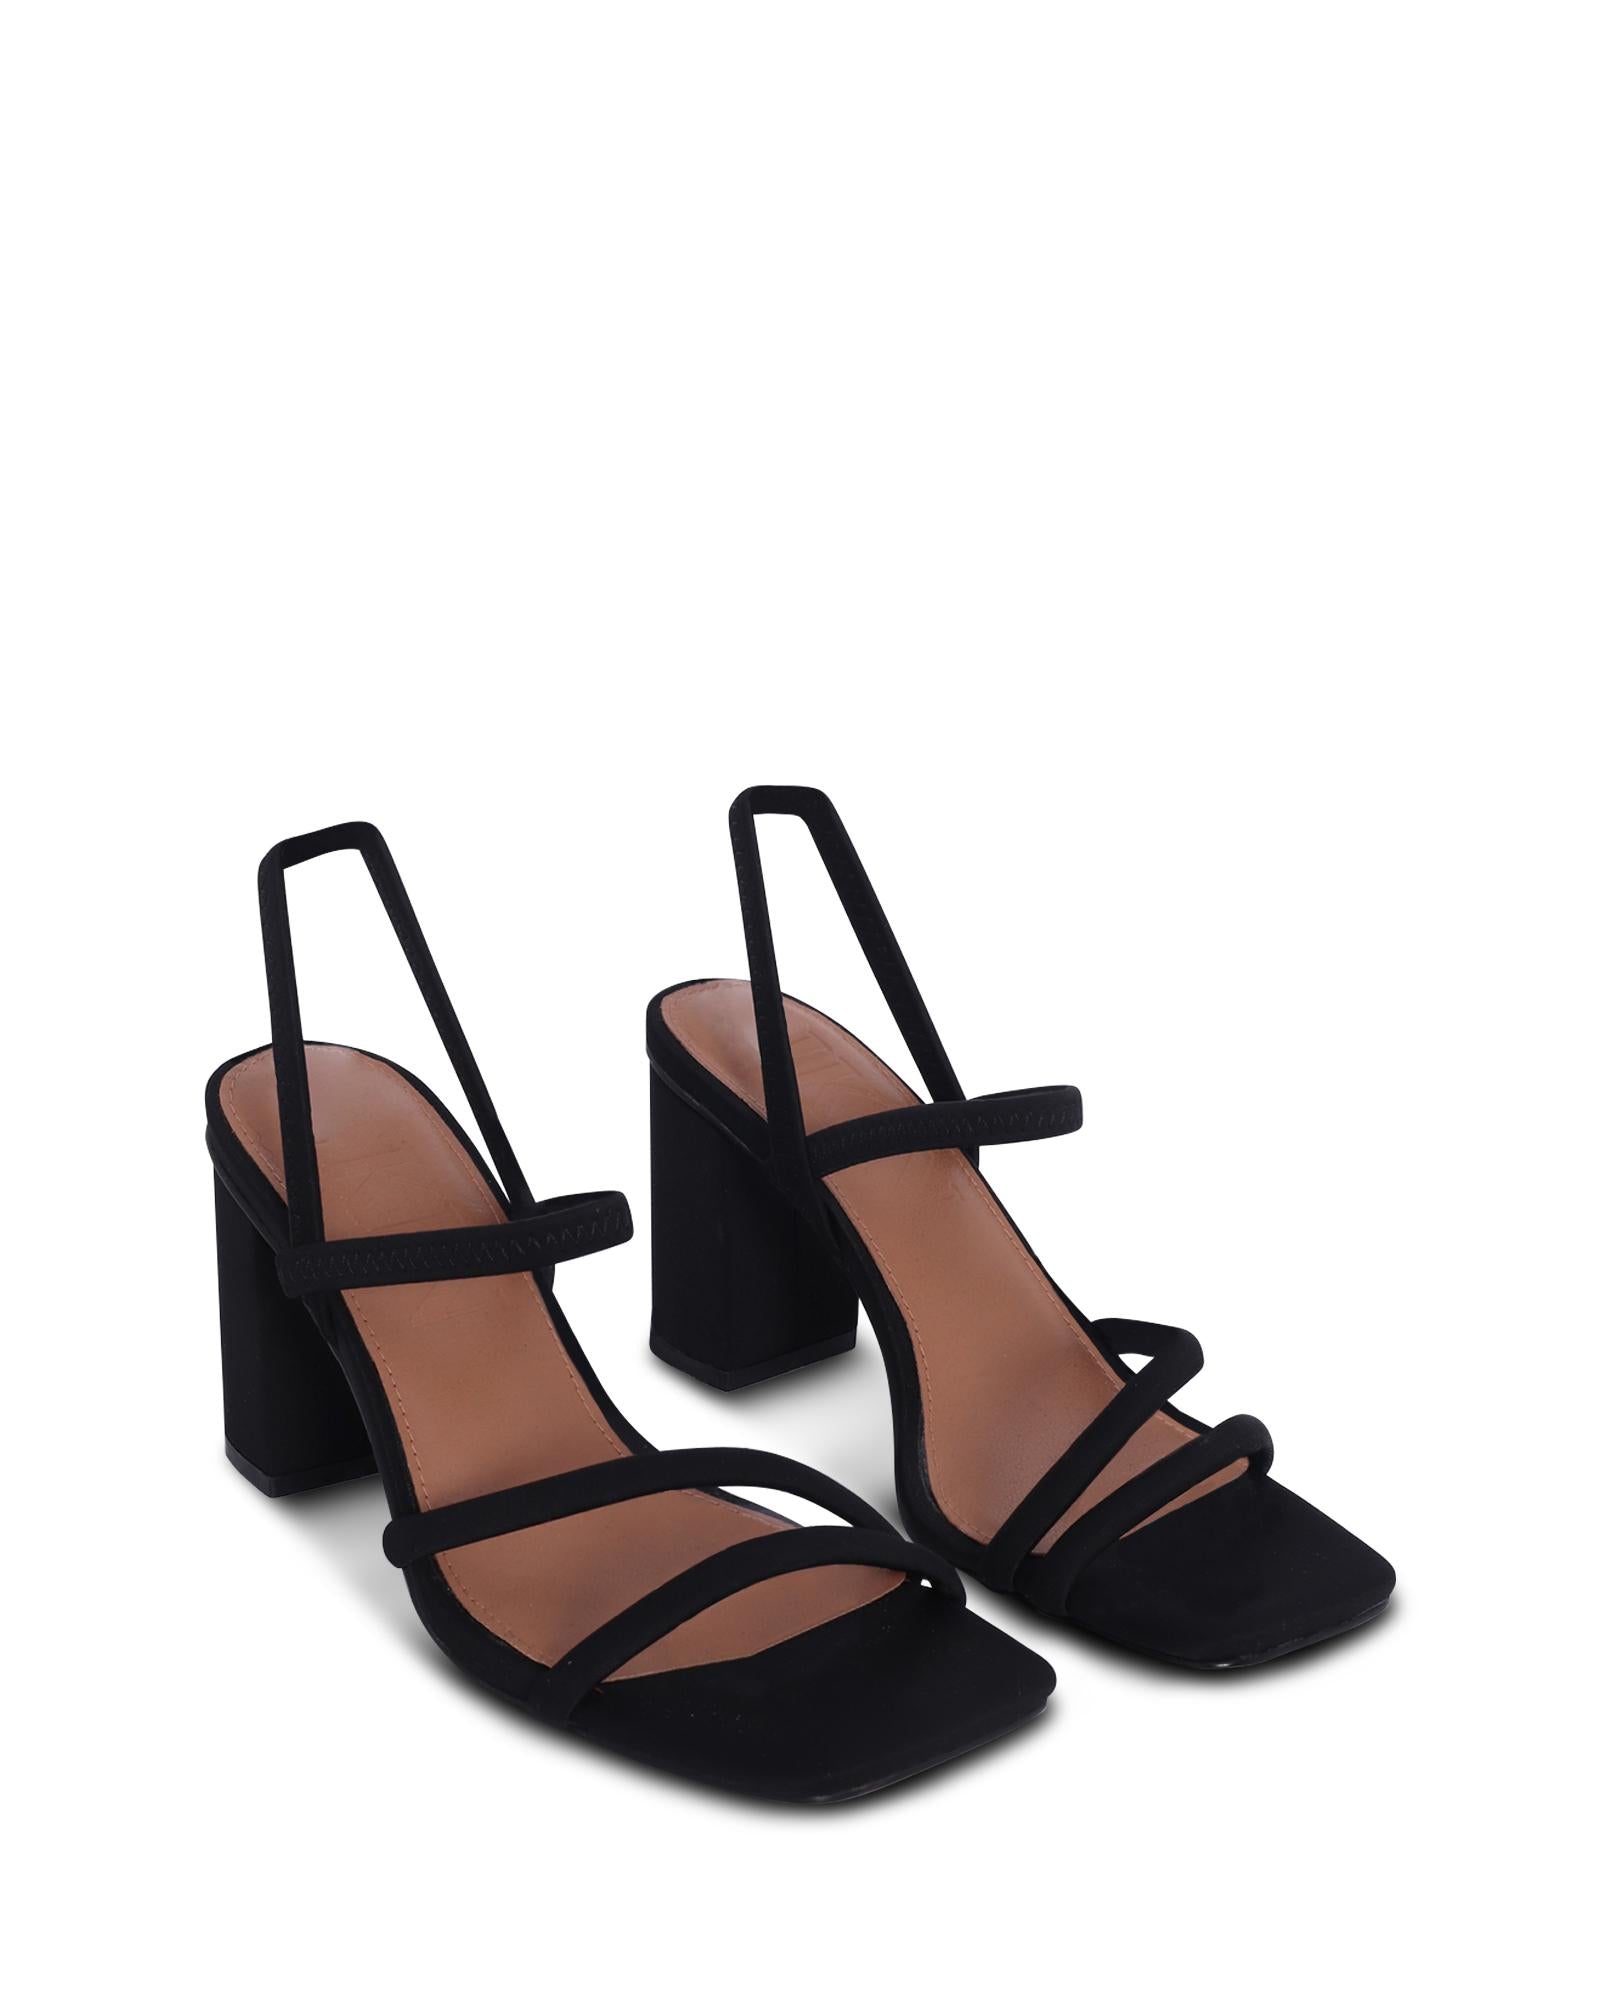 Colombo Black 8cm Heel